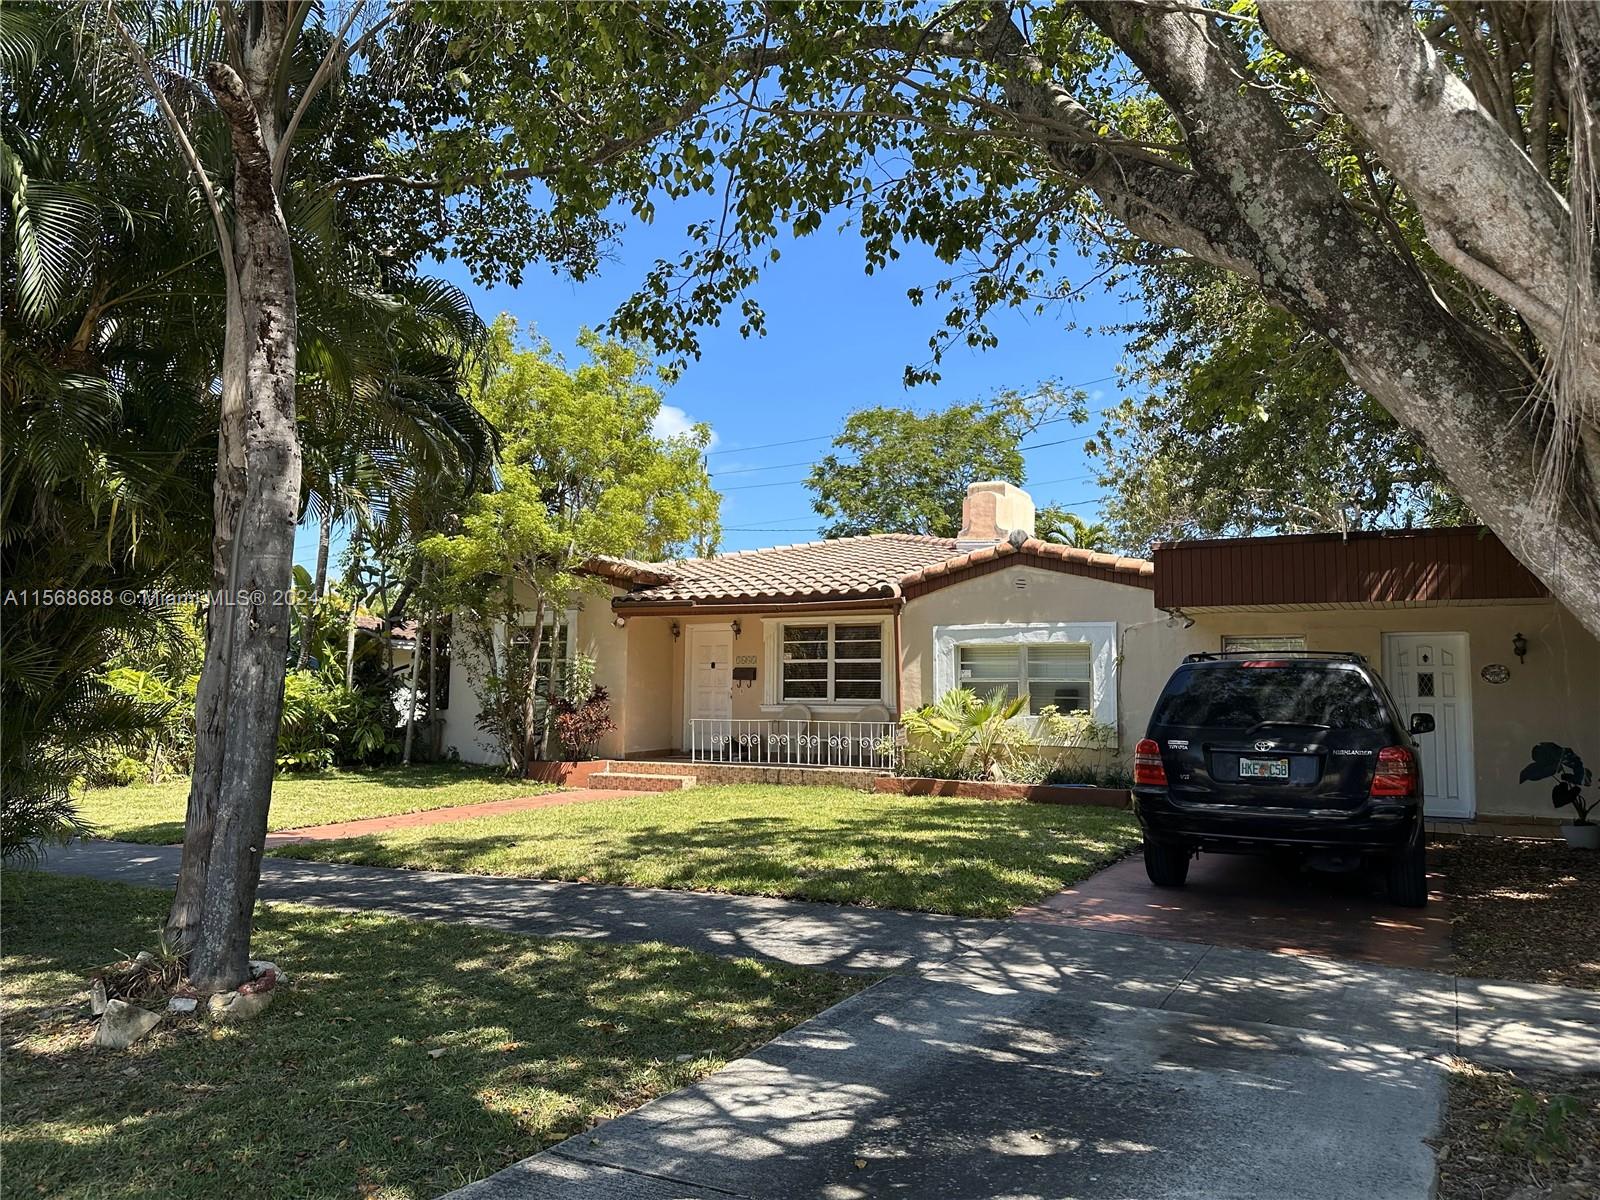 Rental Property at 3681 Sw 3rd Ave, Miami, Broward County, Florida -  - $900,000 MO.